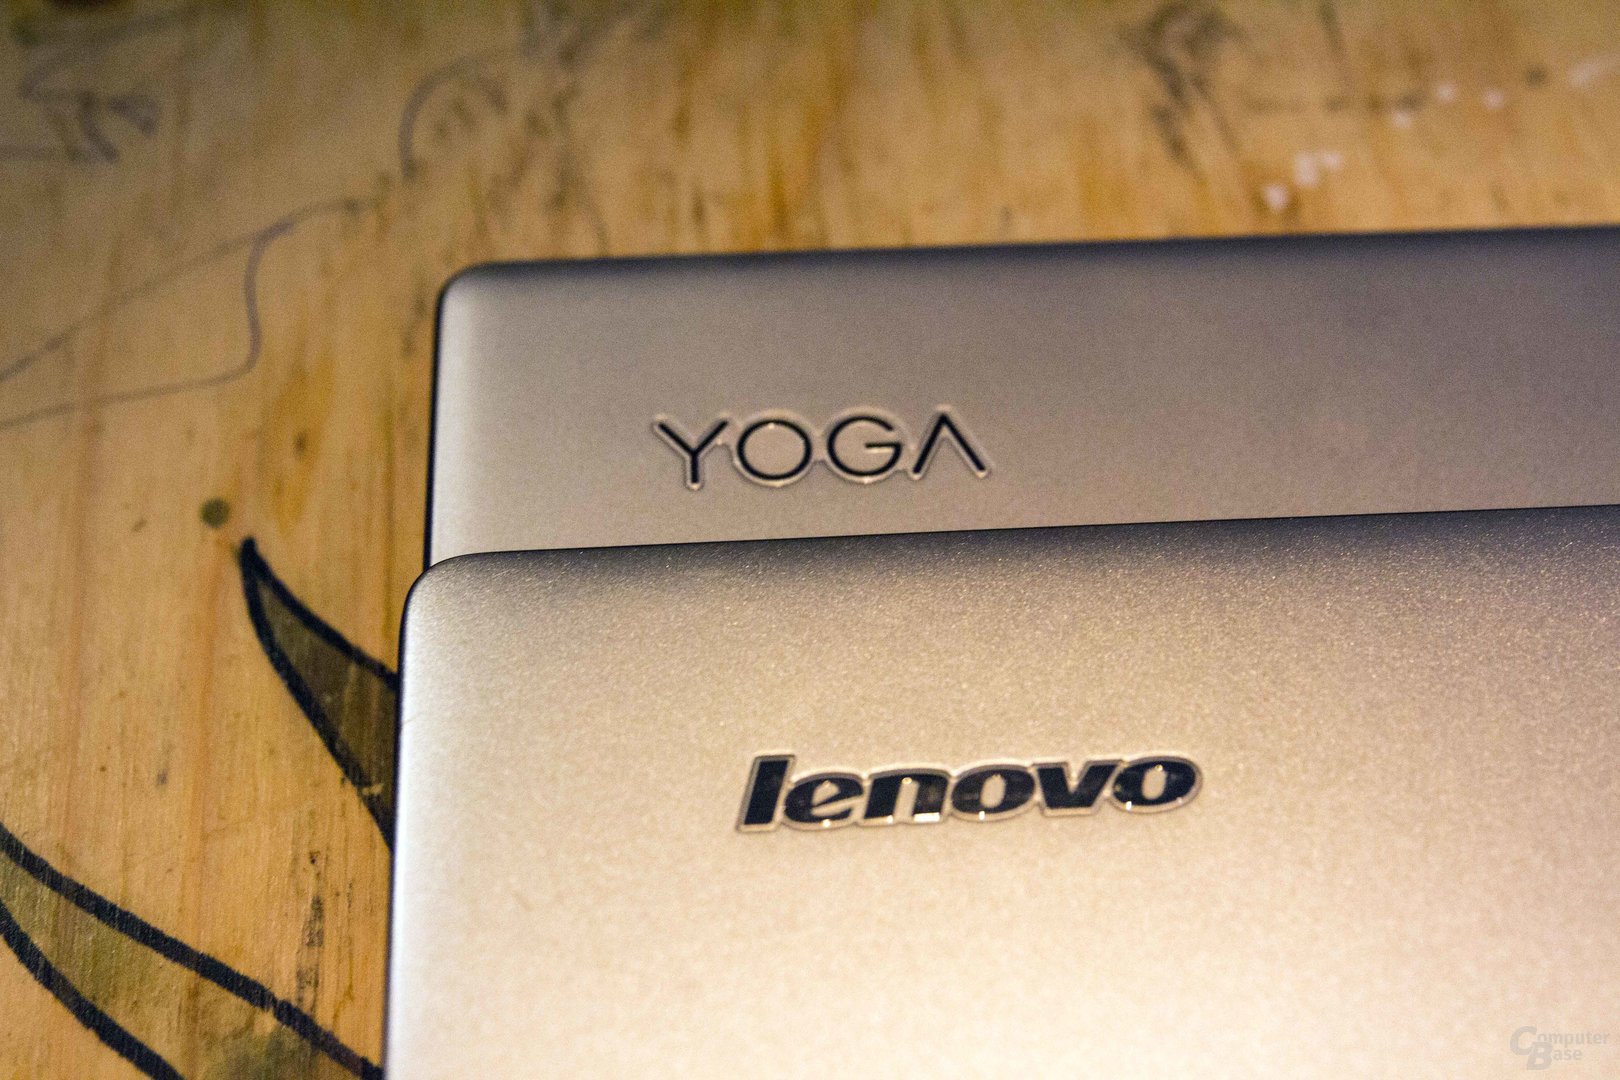 Lenovo Schriftzug und Yoga Branding